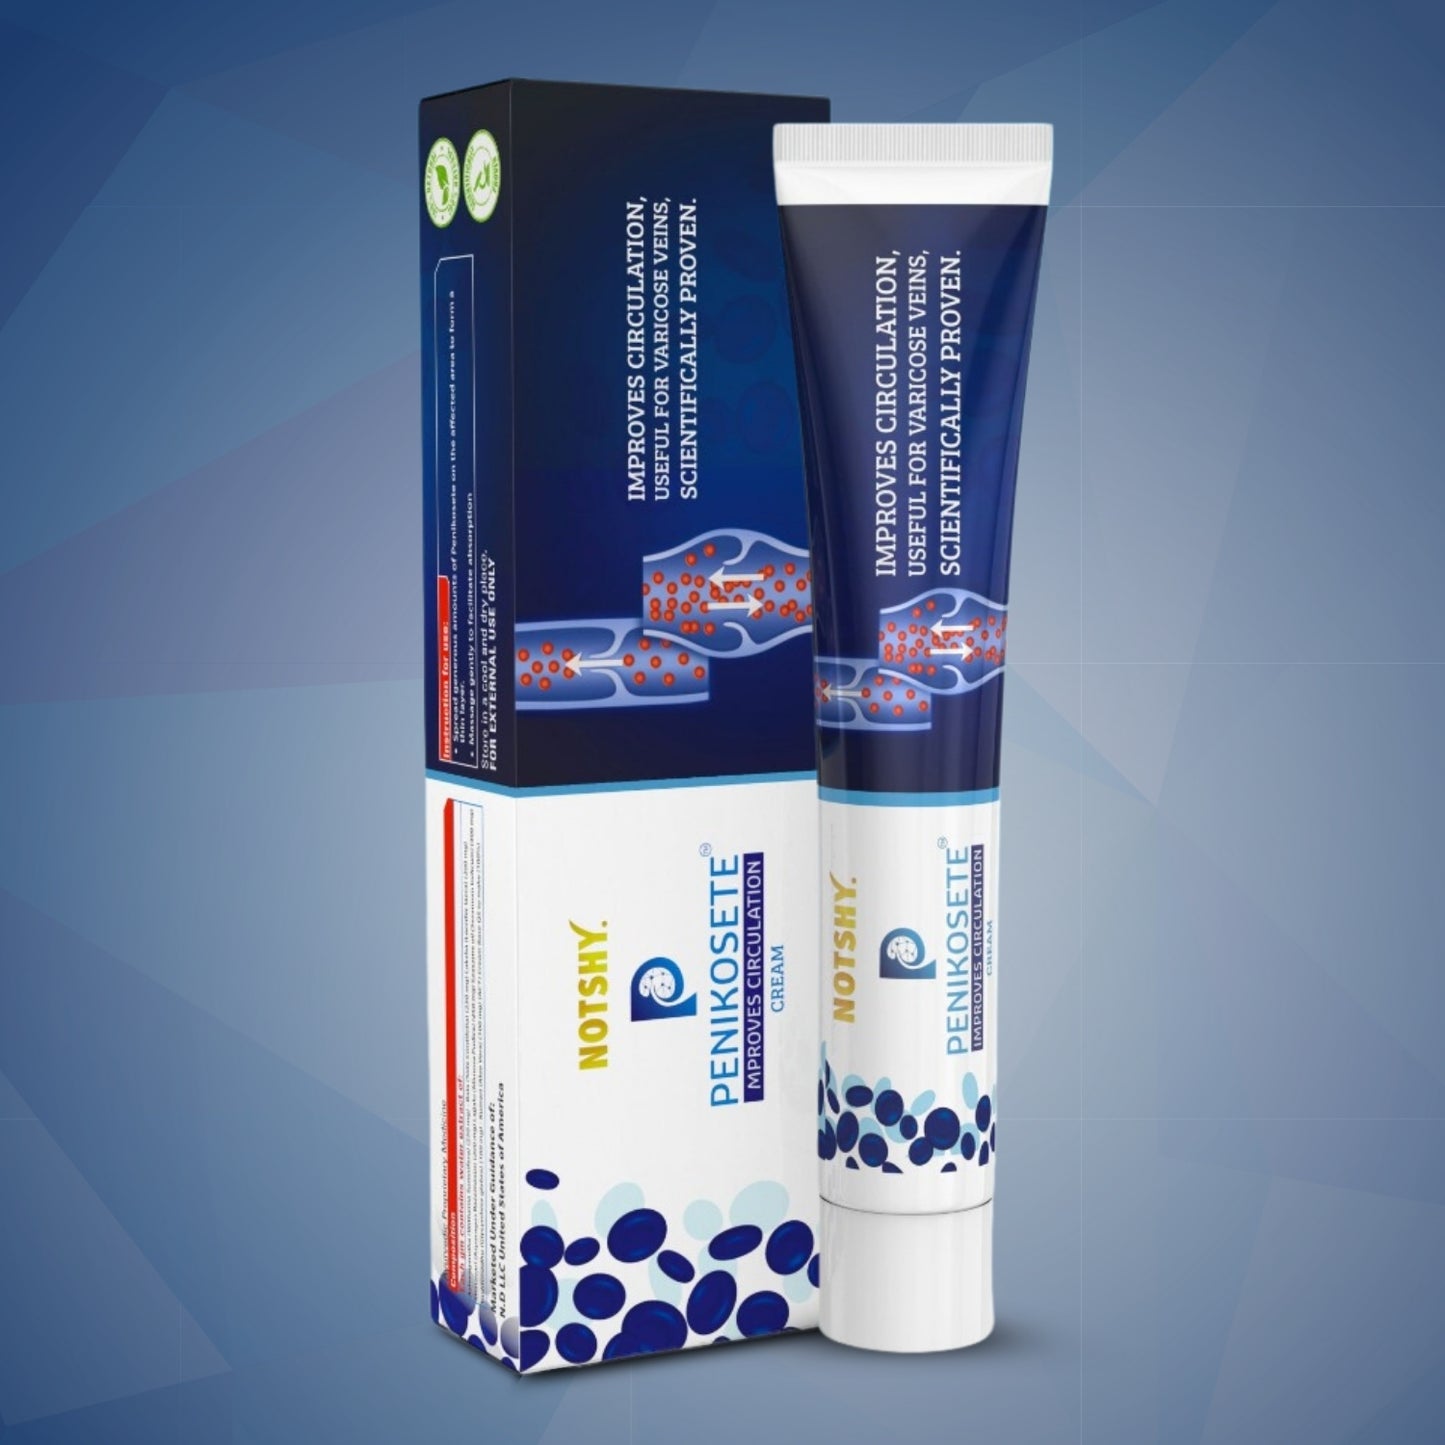 PENIKOSETE Ayurvedic Cream  |Natural Solution for Management of Varicose Veins, Spider Veins & Varicocele |  Buy 1 or Special Deal 2+1 FREE Pack |